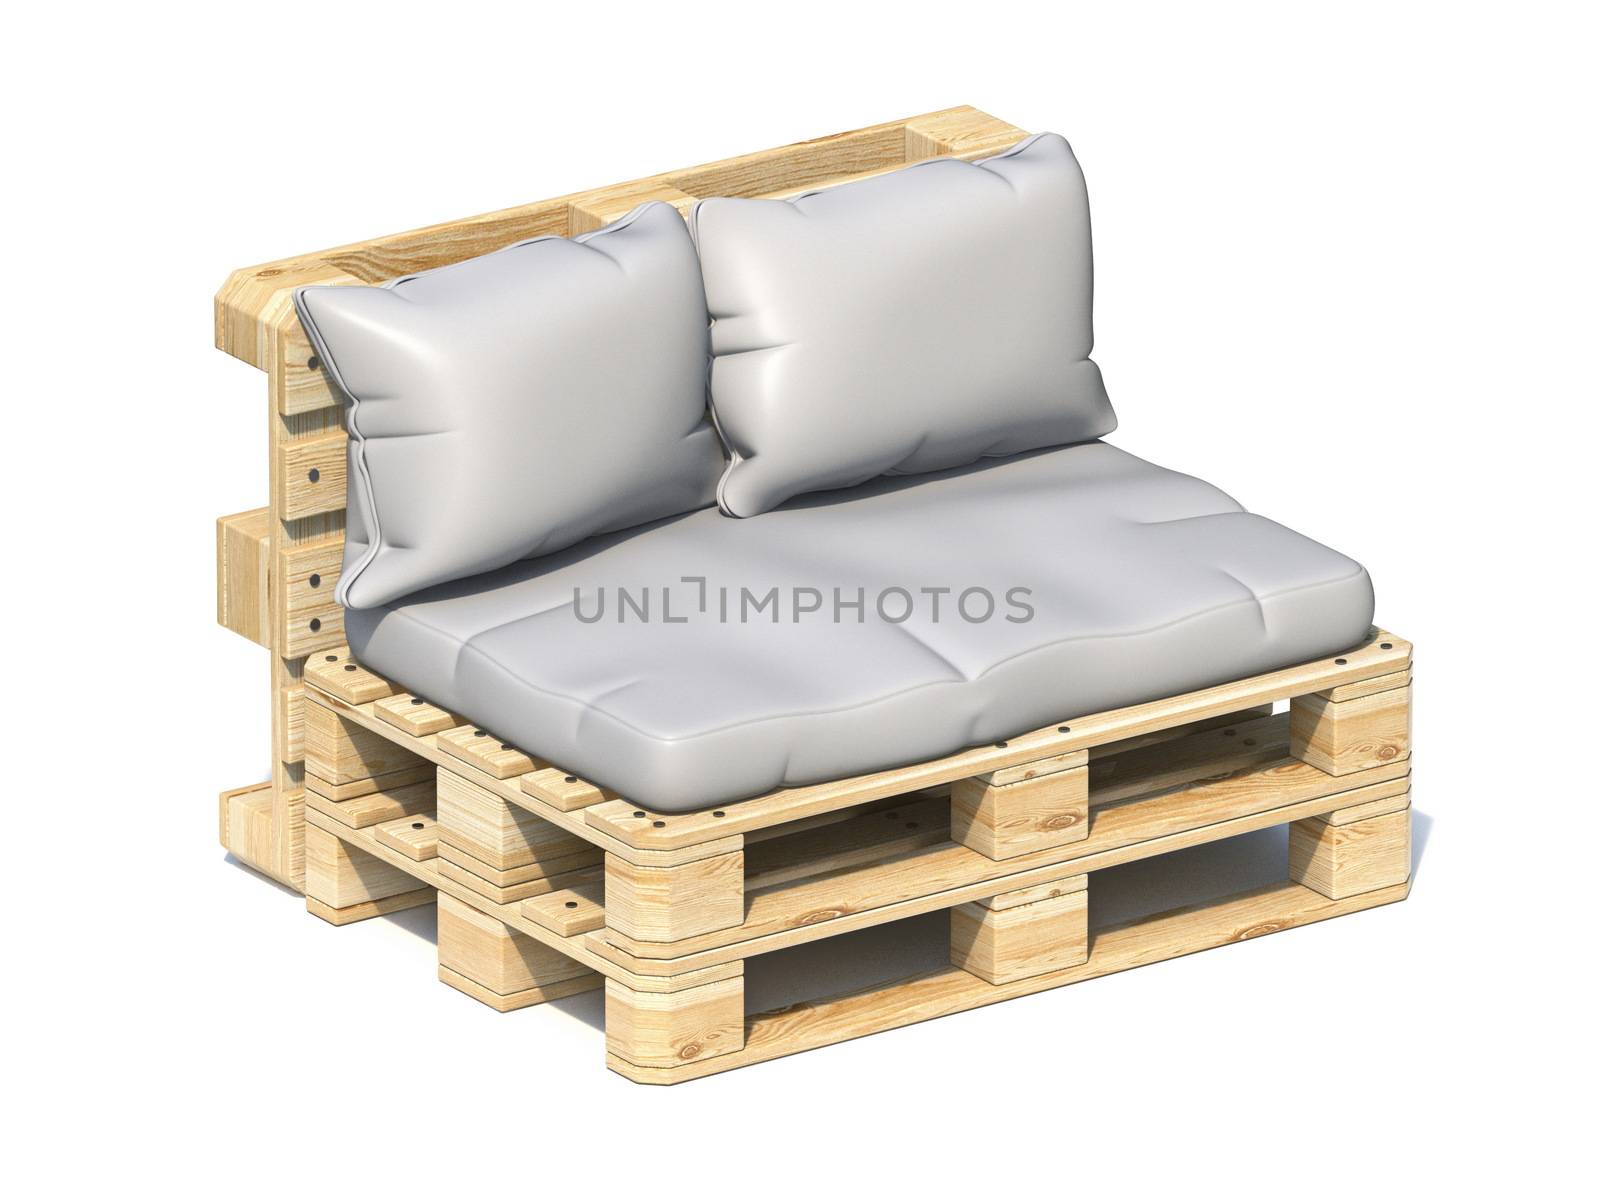 Wooden pallet sofa 3D render illustration isolated on white background